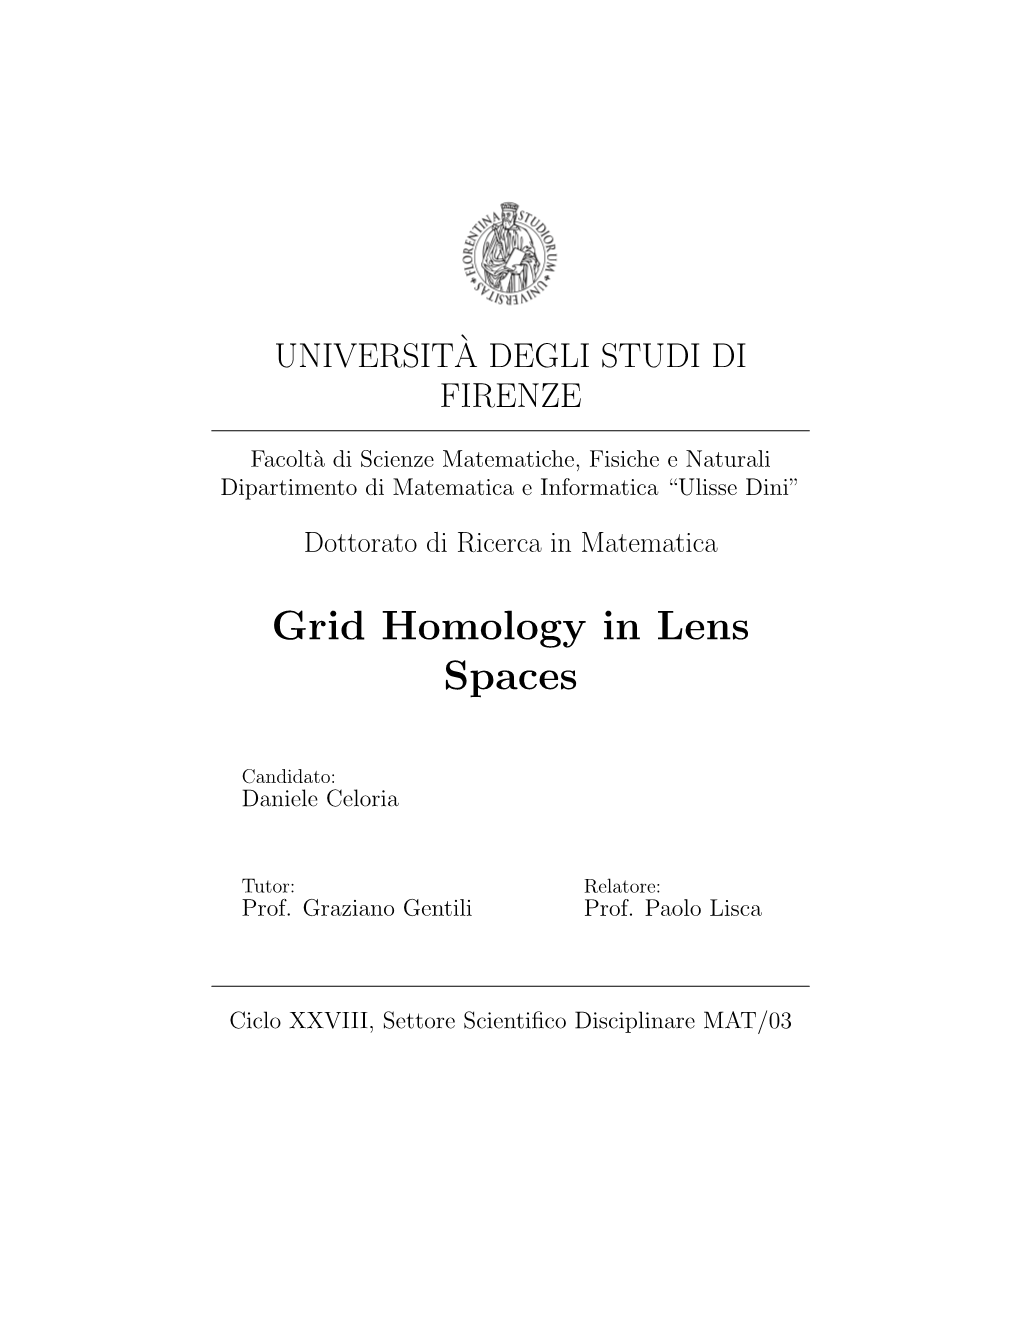 Grid Homology in Lens Spaces